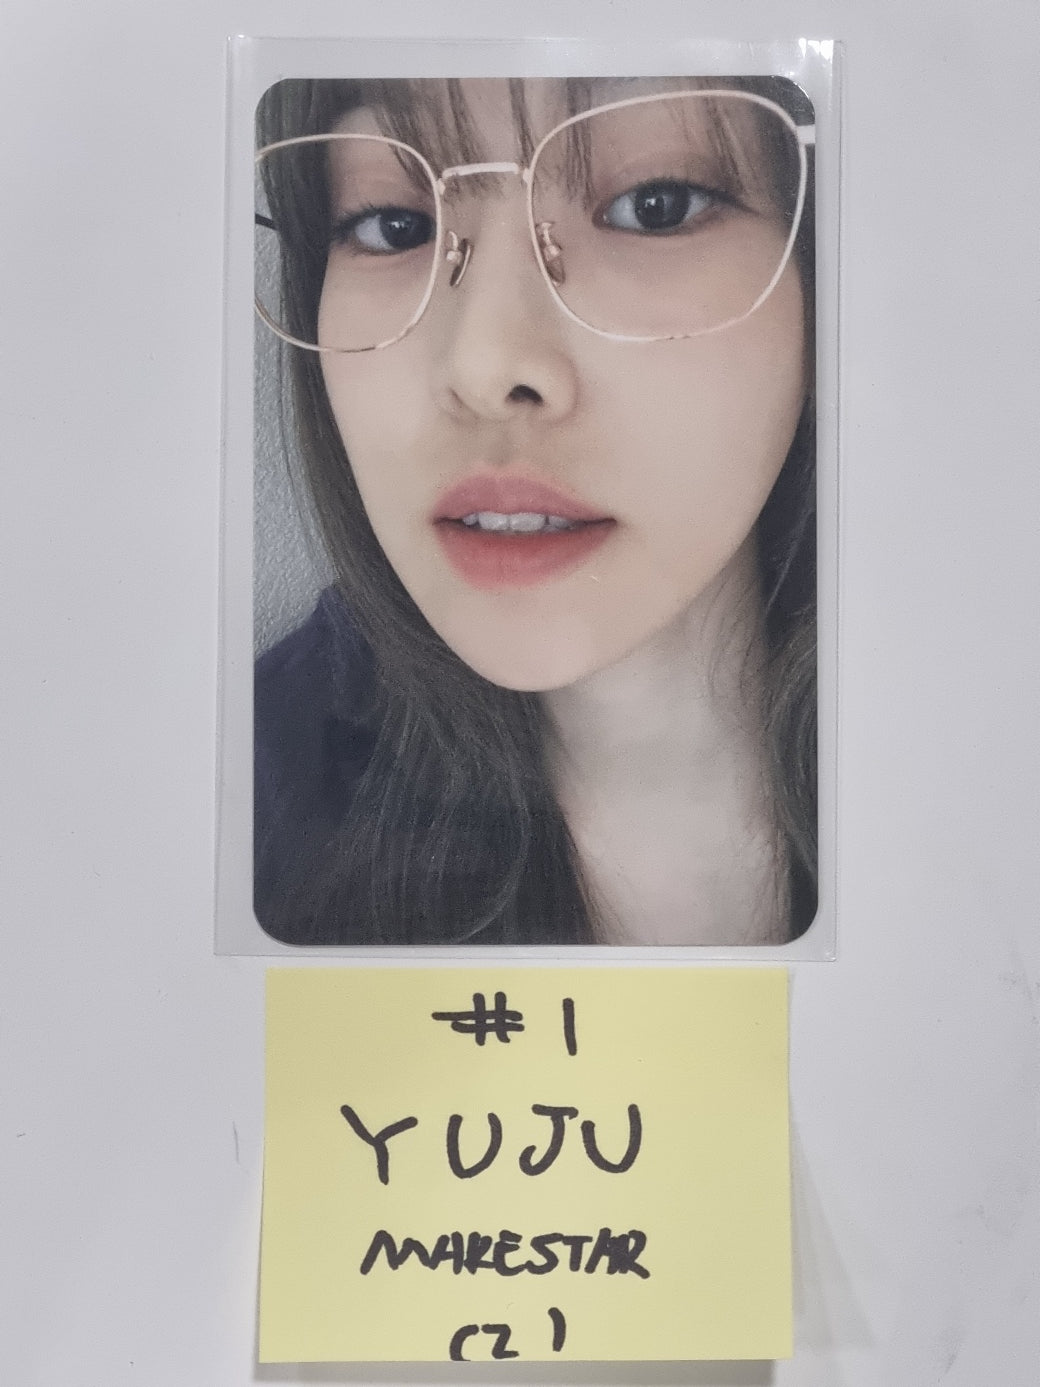 YUJU (Of 여자친구) "O" - Wonderwall 팬사인회 이벤트 포토카드